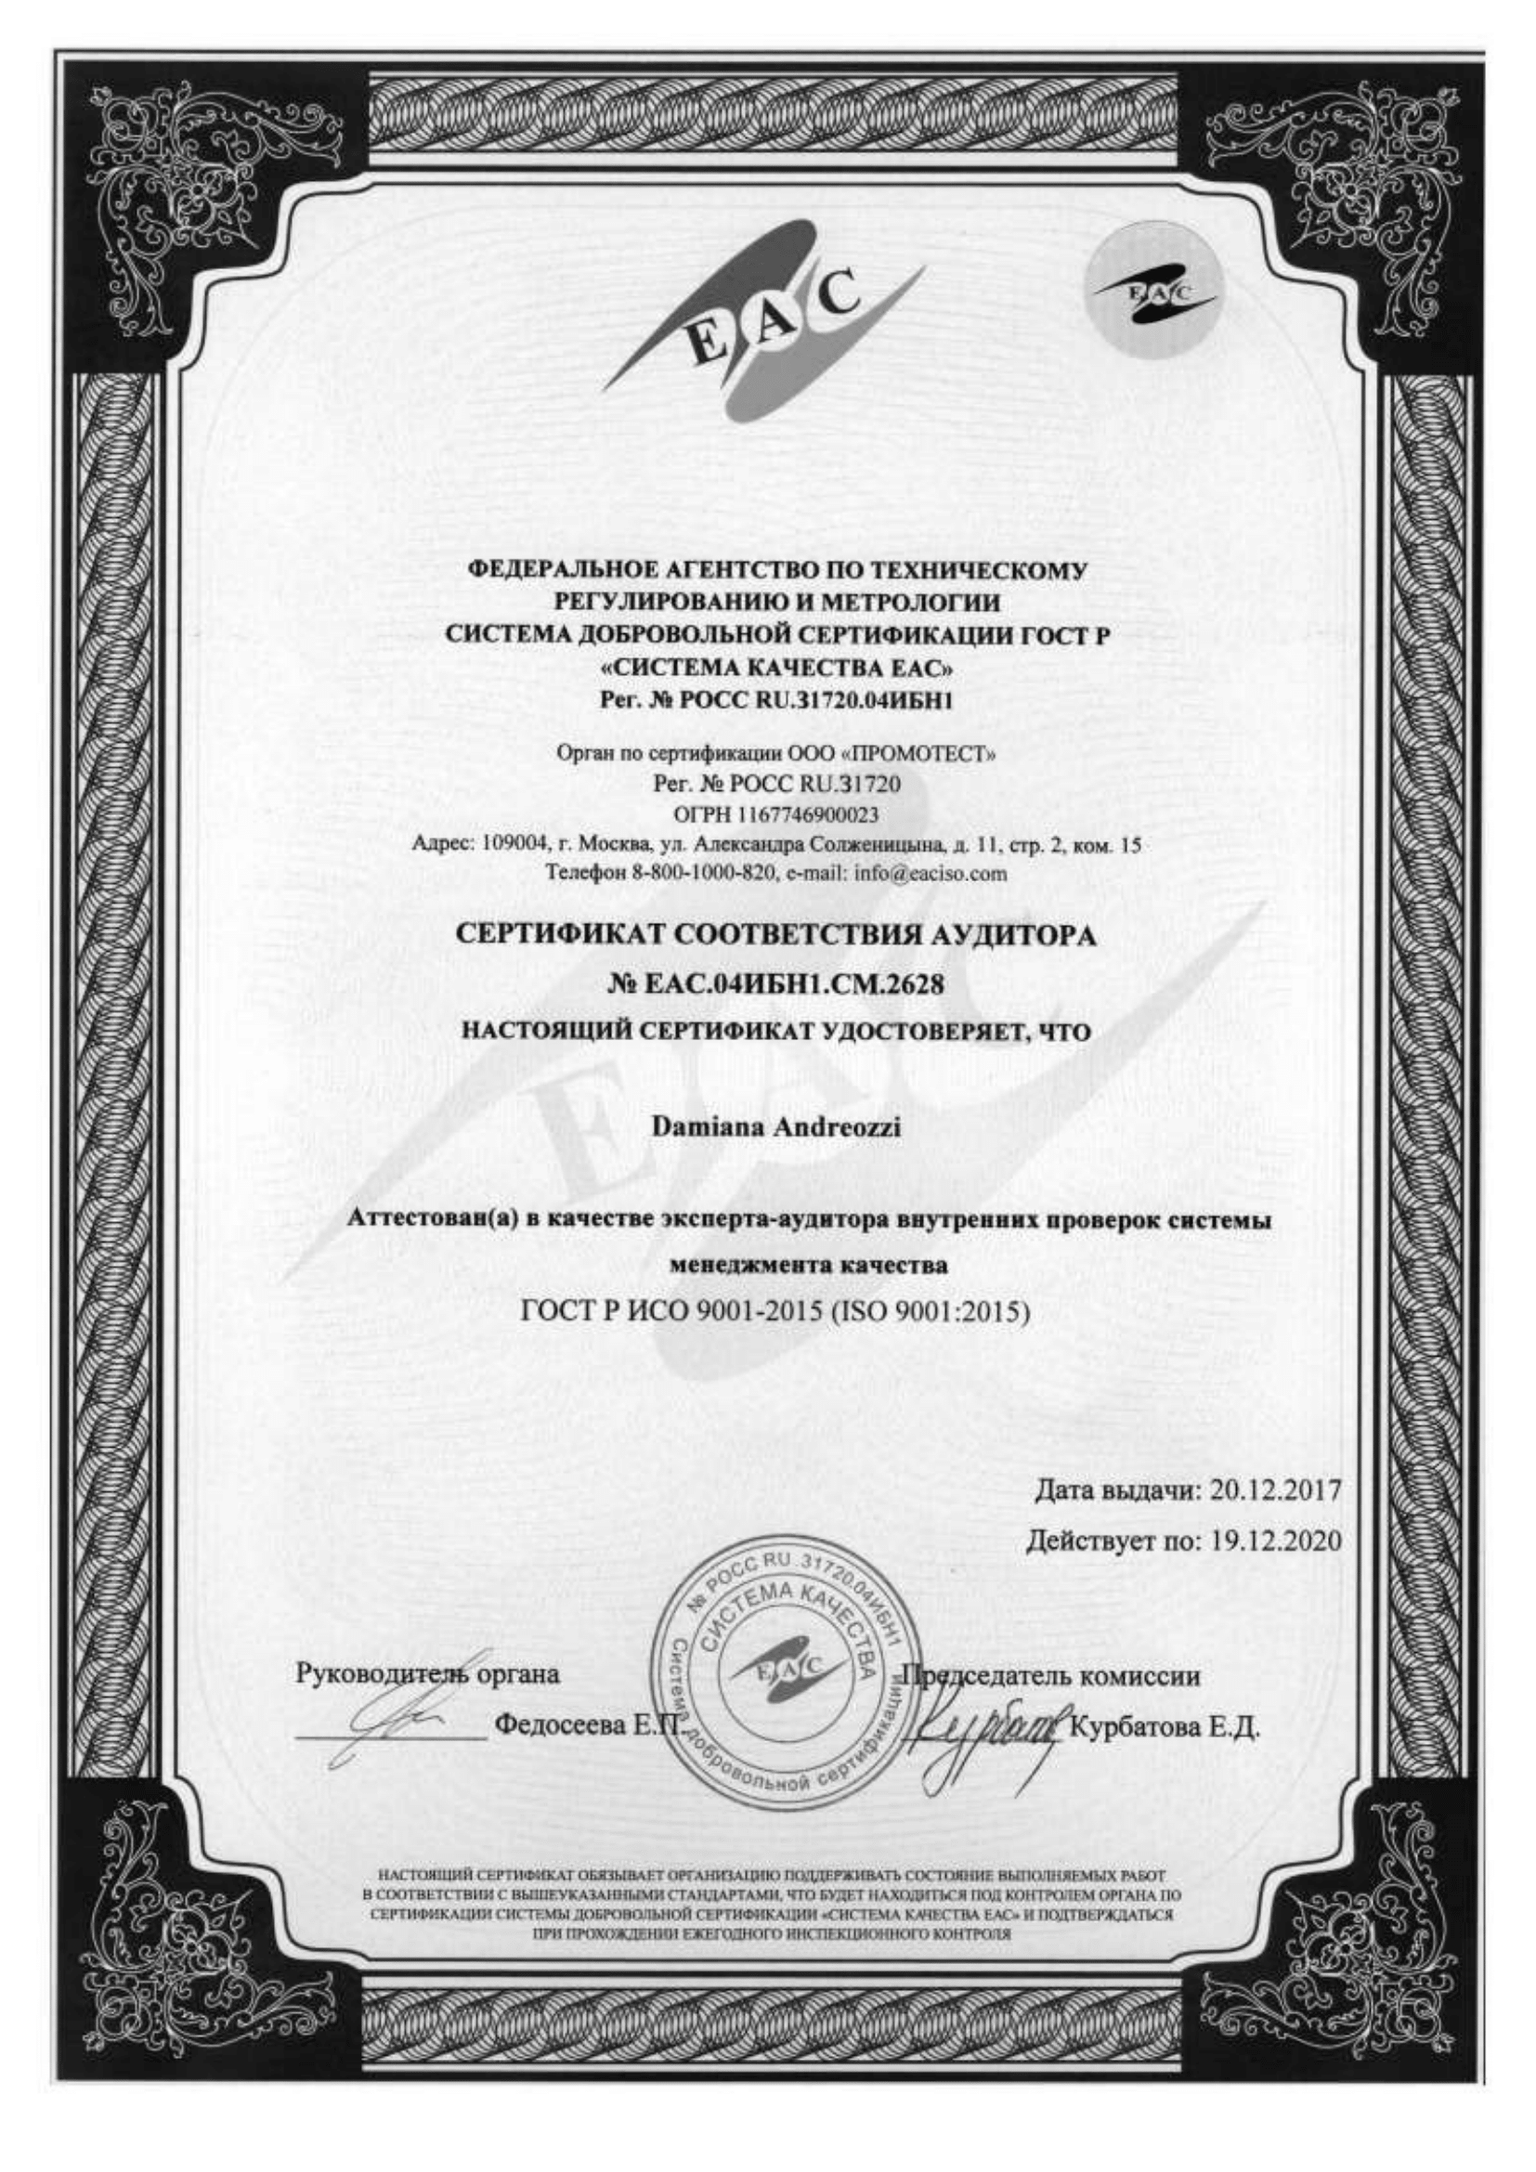 /images/certificates/sertificate4-8.png